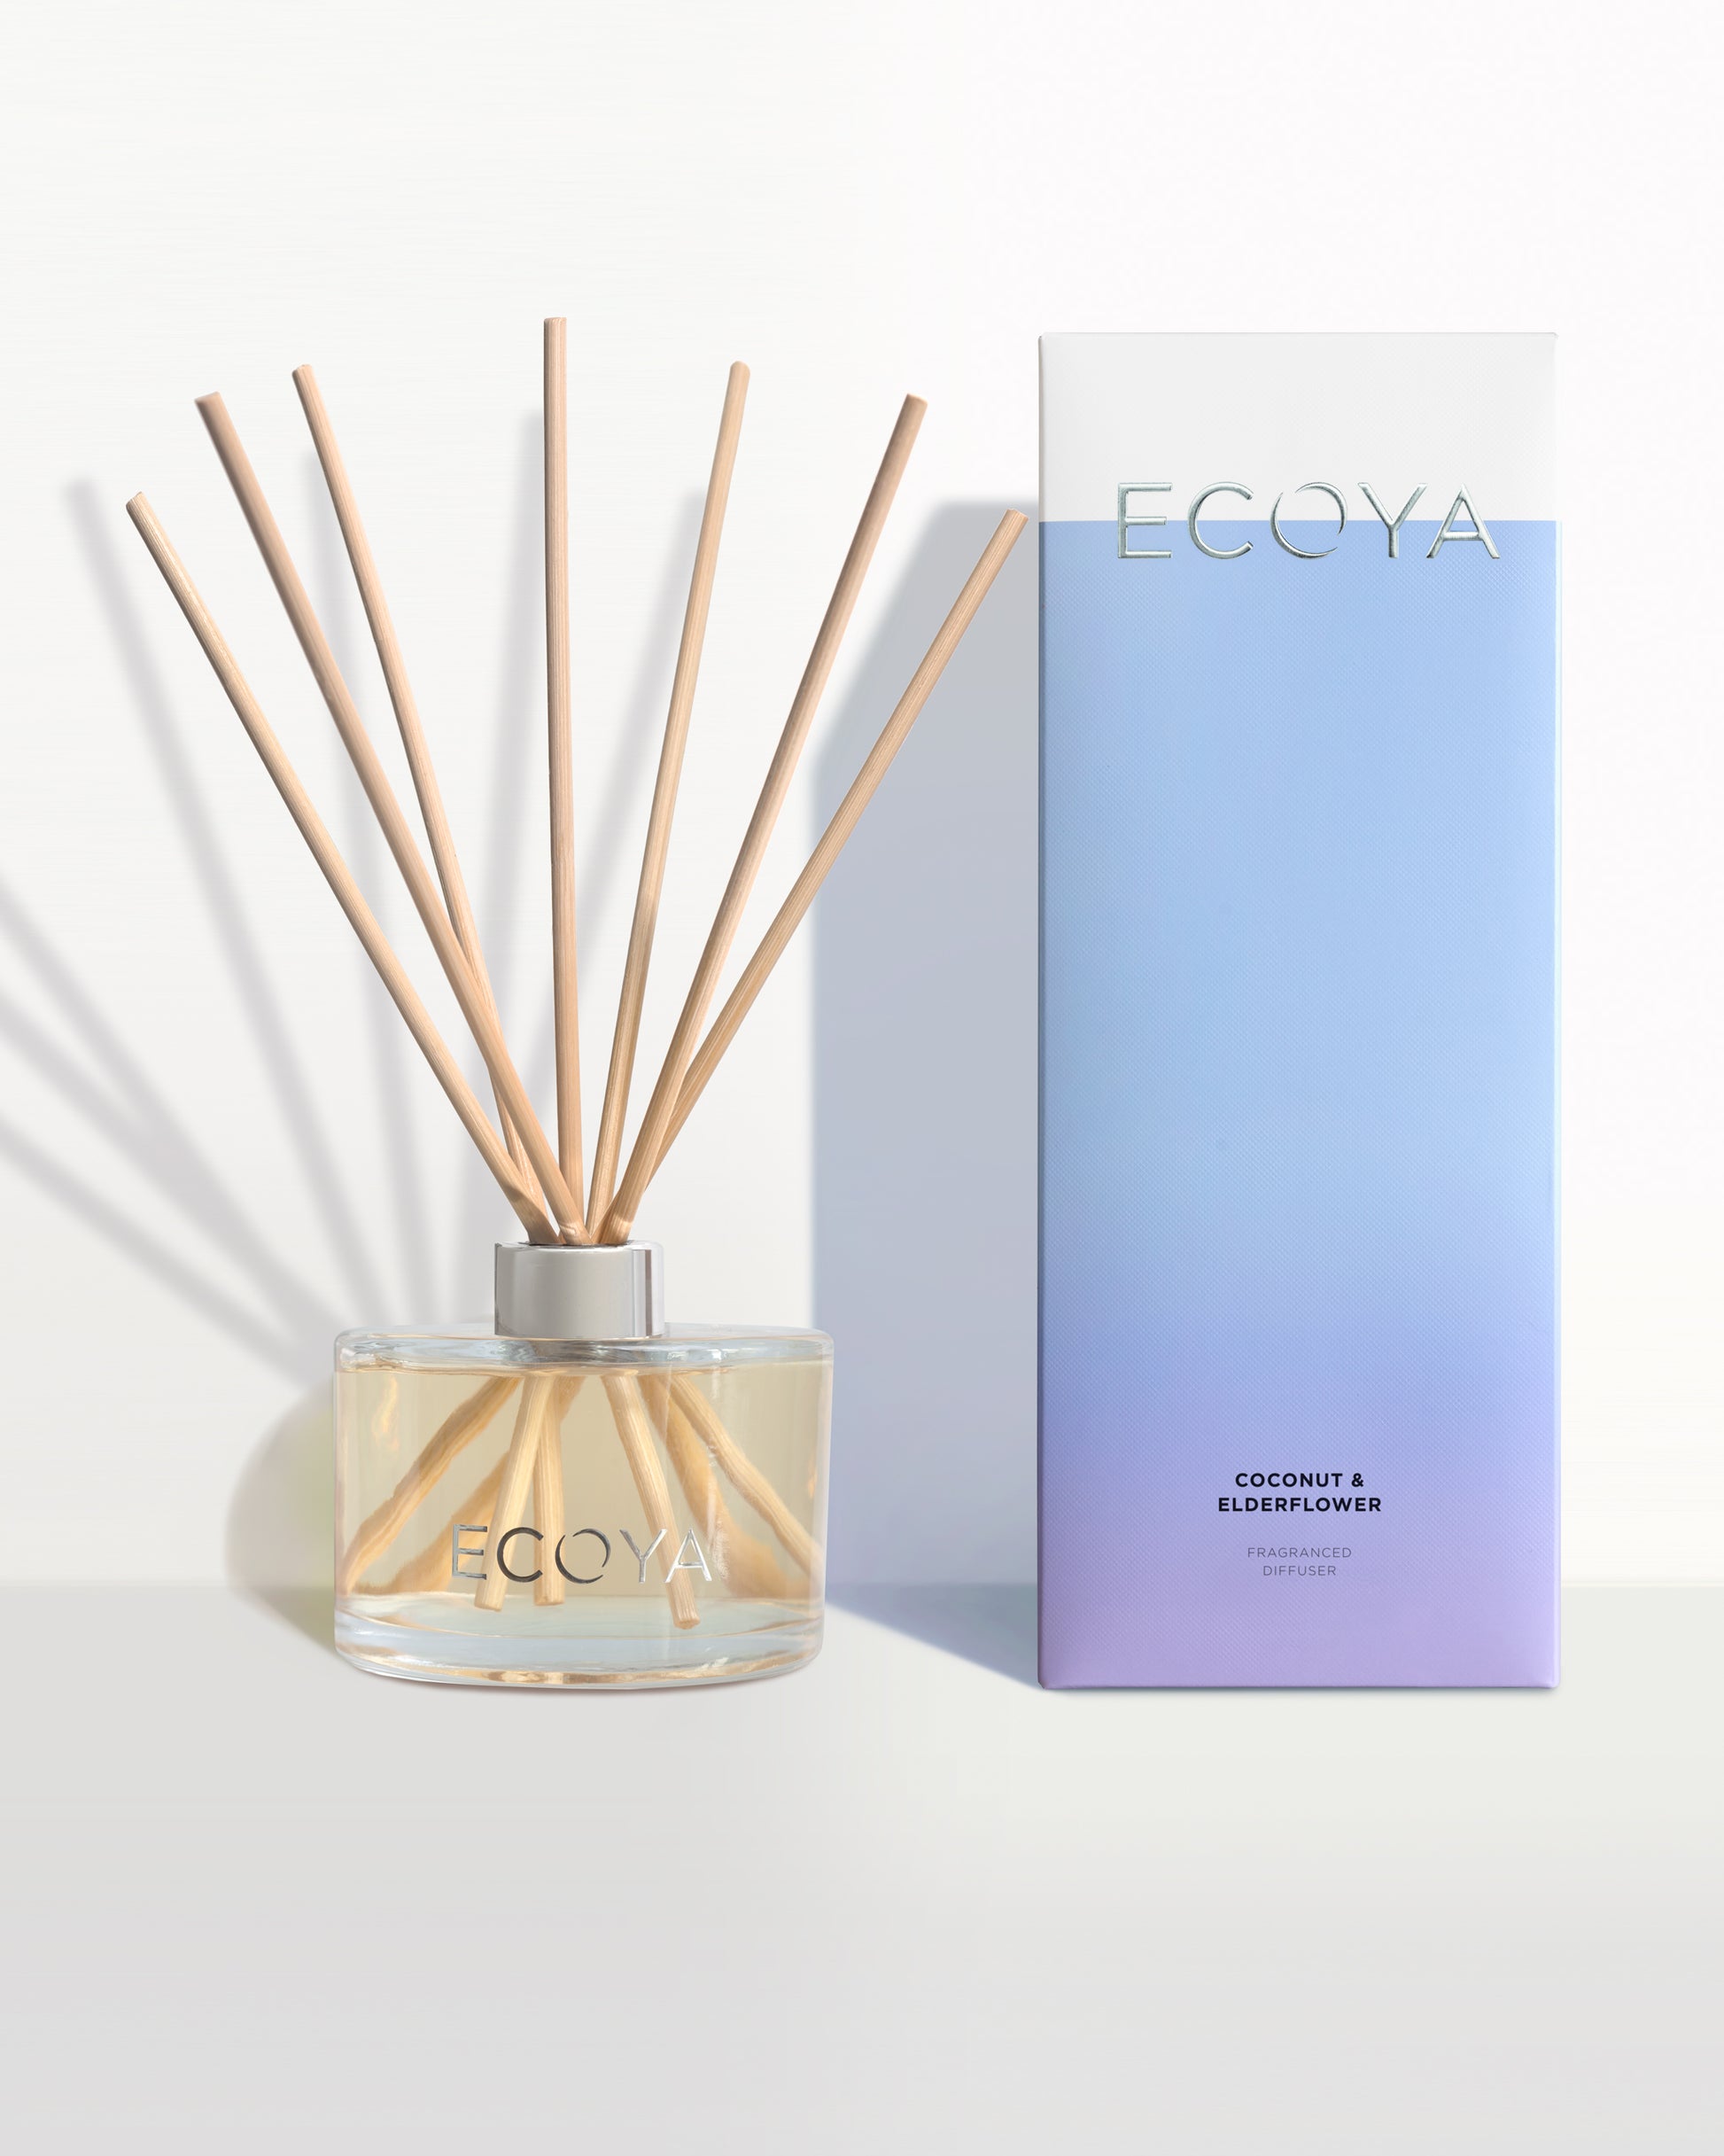 Coconut & Elderflower Home fragrance online gifts ecoya